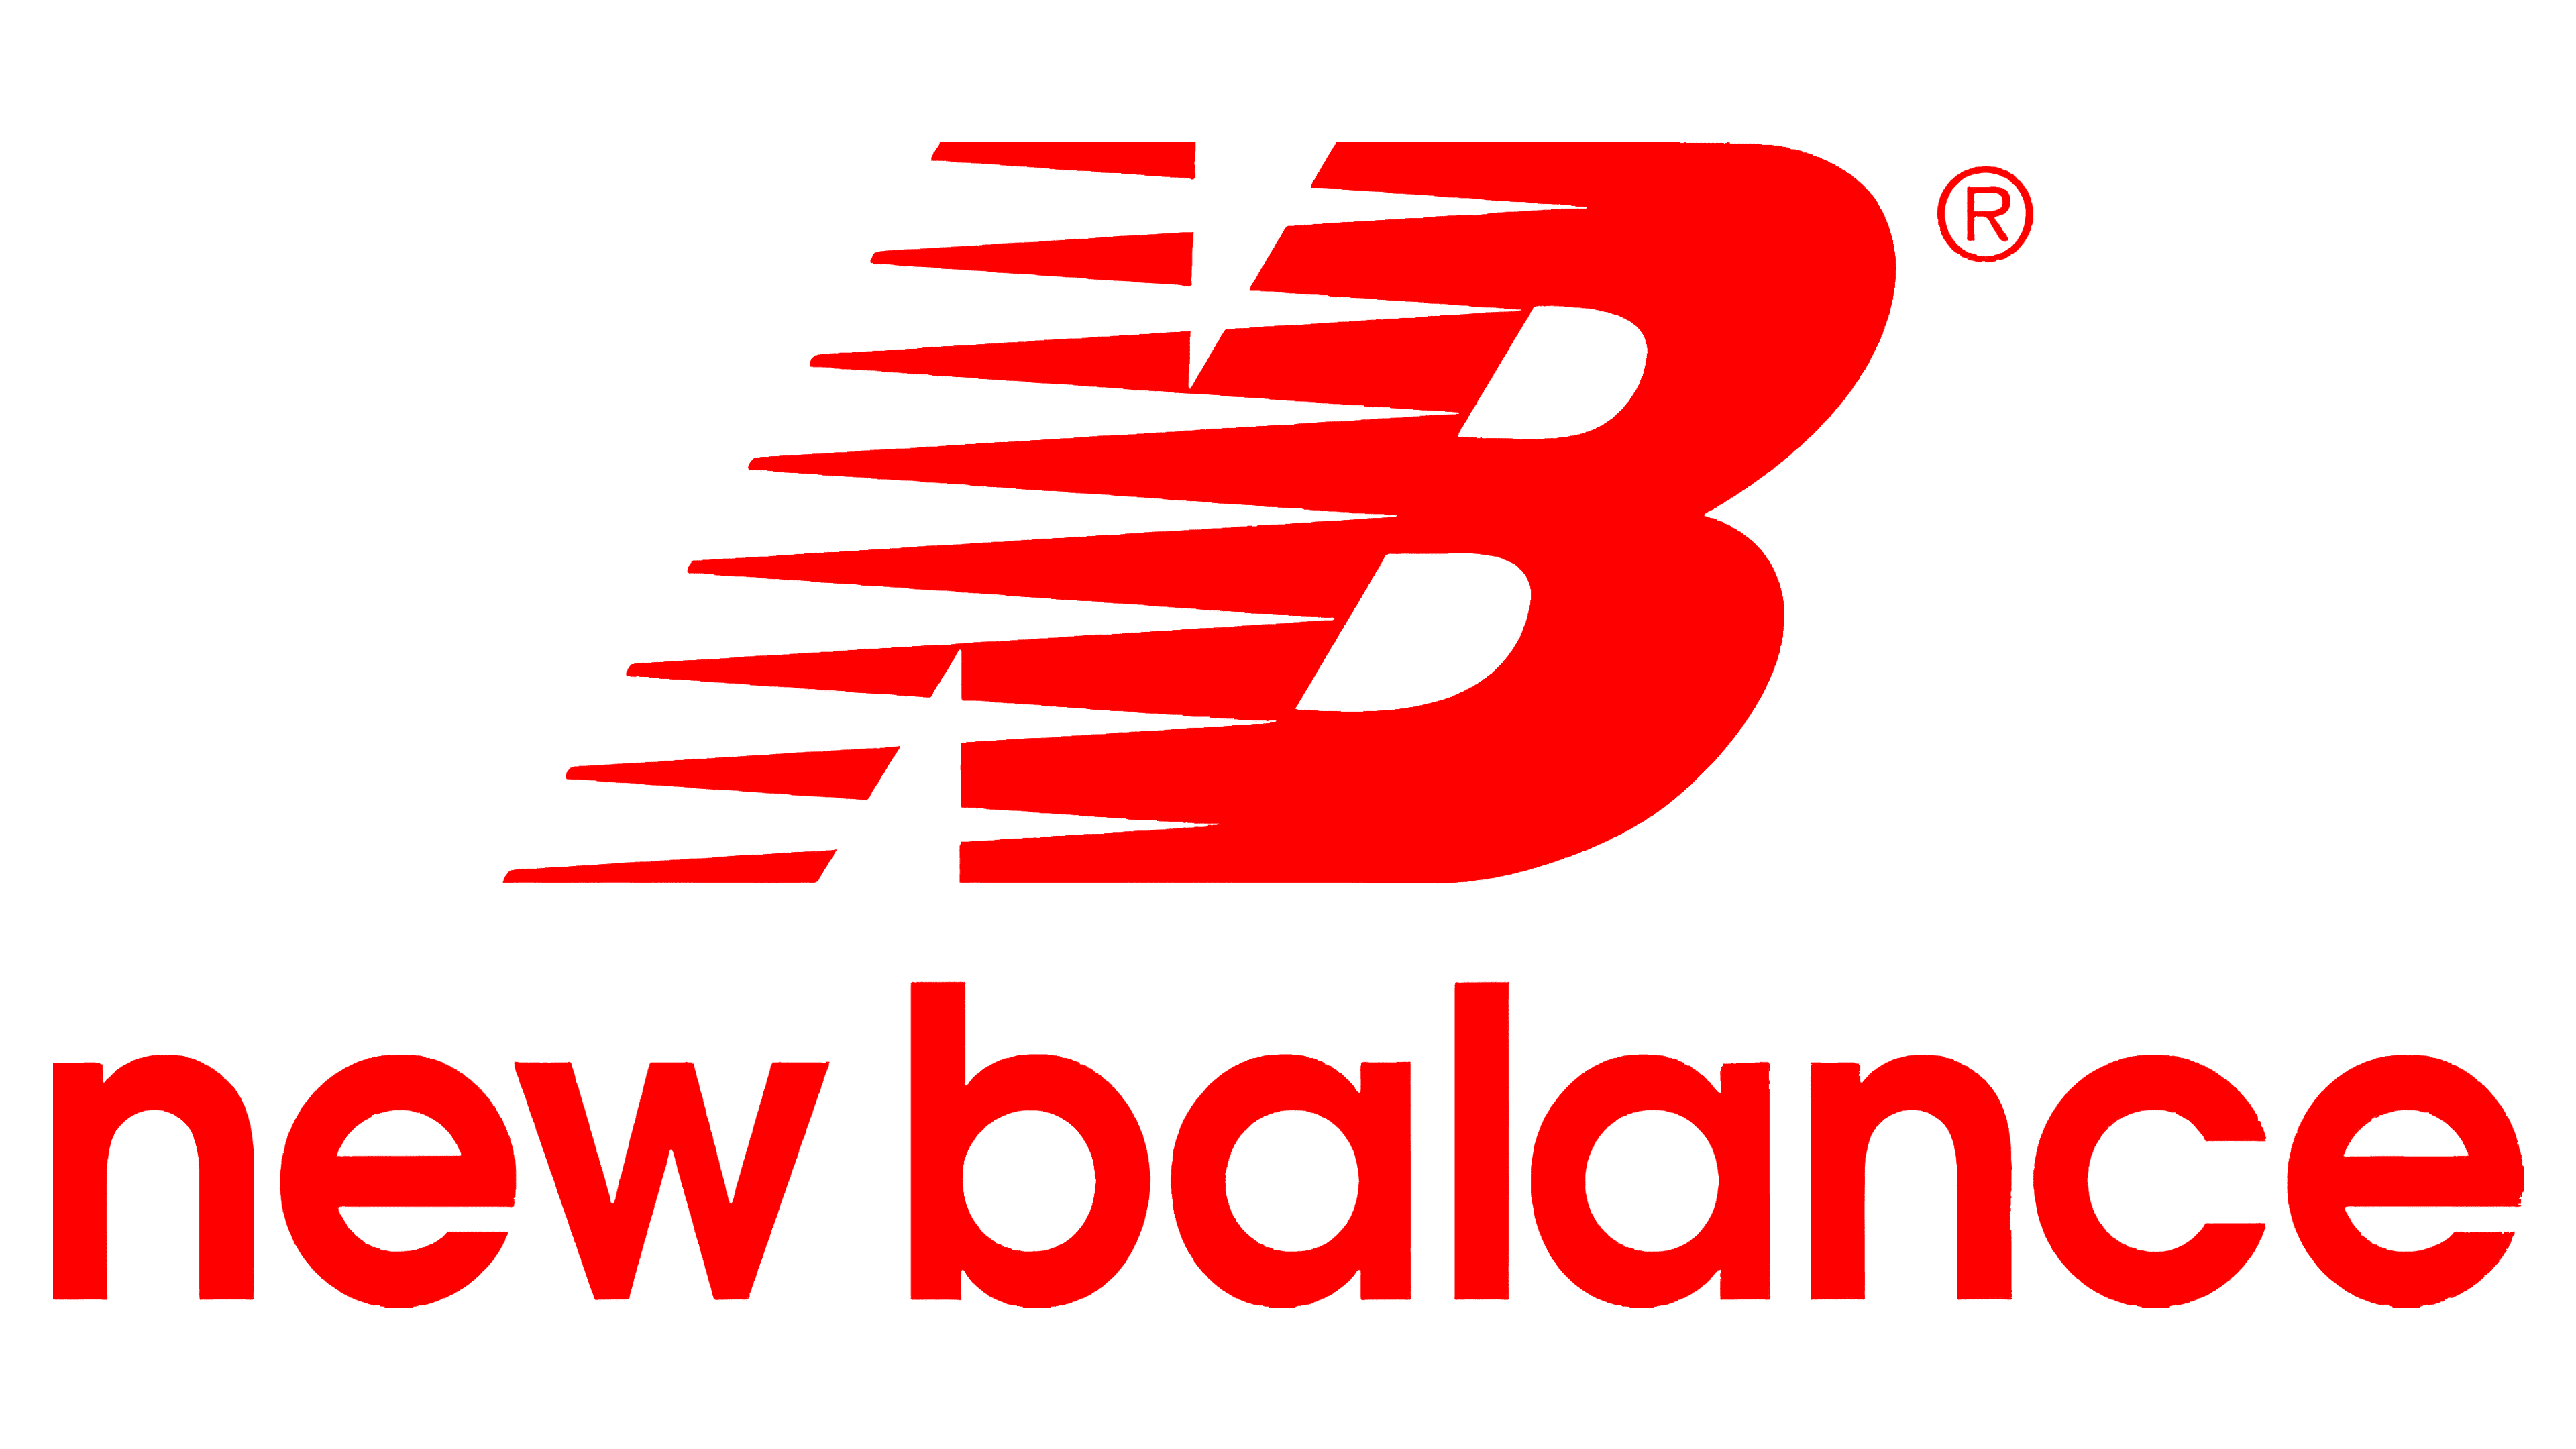 new balance logo black